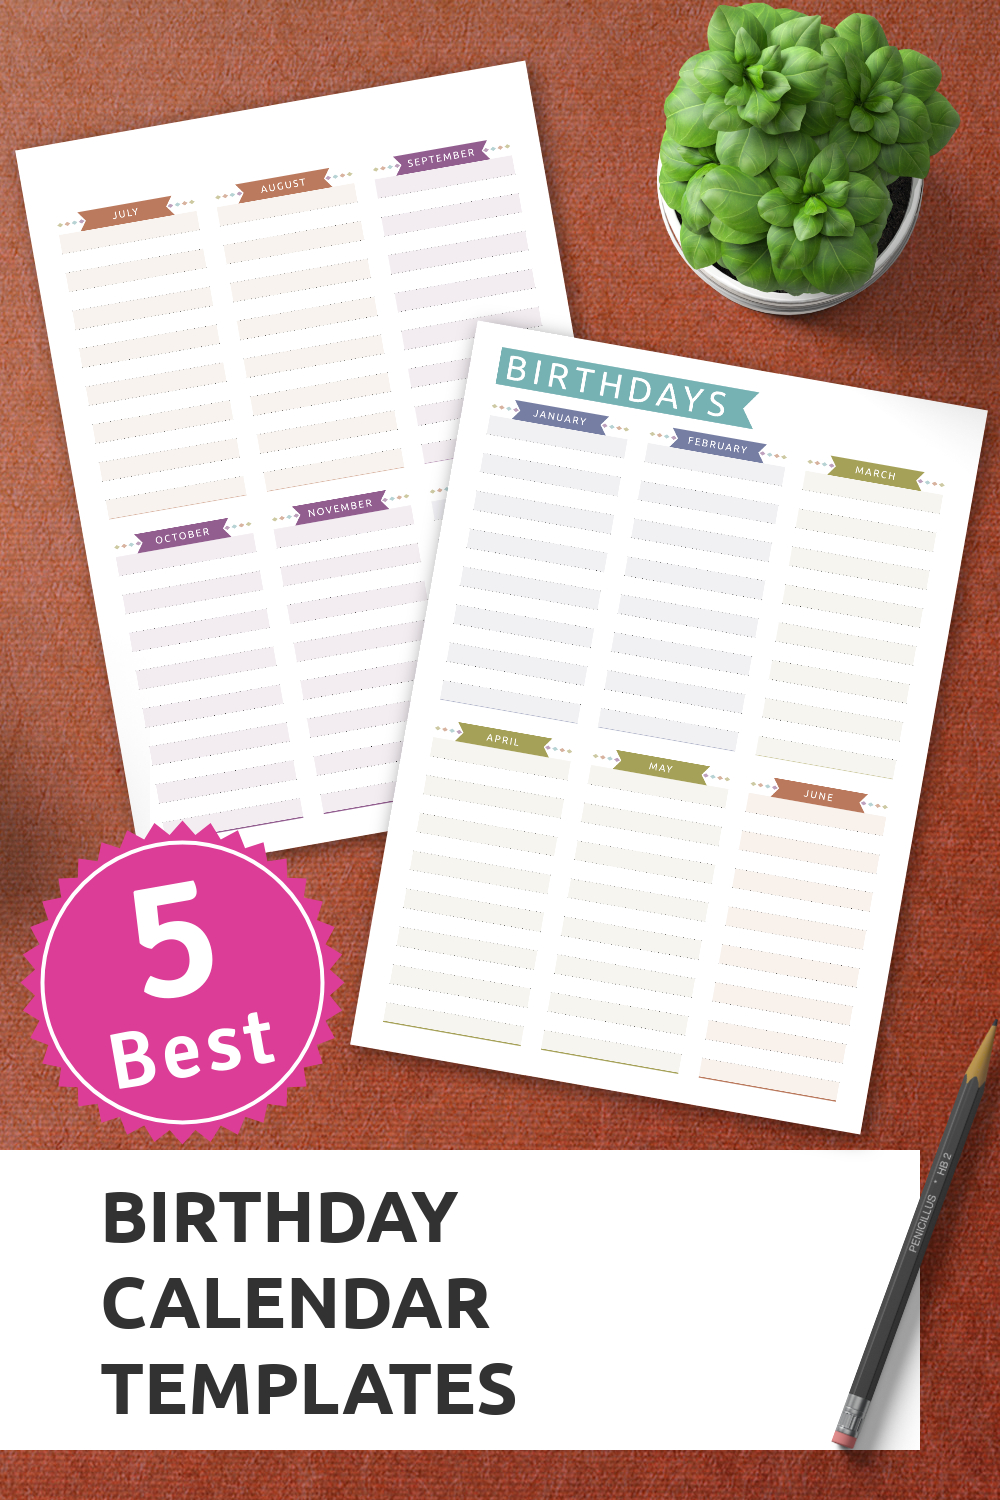 Birthday Calendar Templates | Birthday Calendar, Calendar intended for Printable Birthday Calendar For Classroom